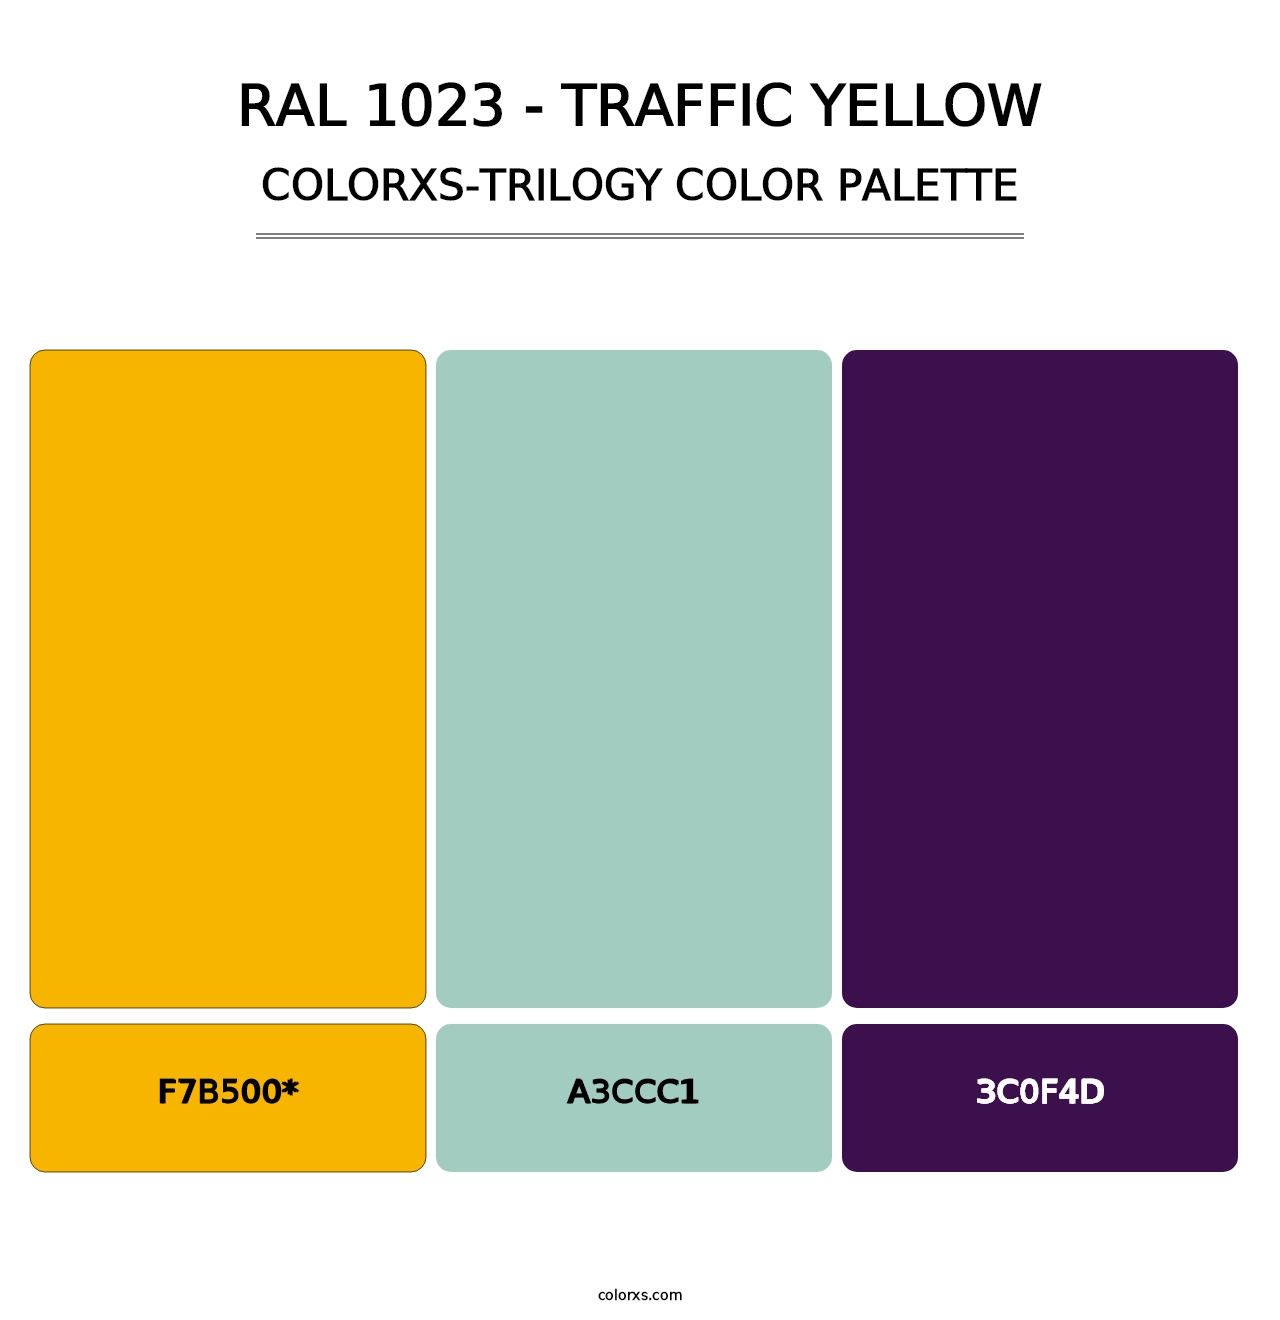 RAL 1023 - Traffic Yellow - Colorxs Trilogy Palette